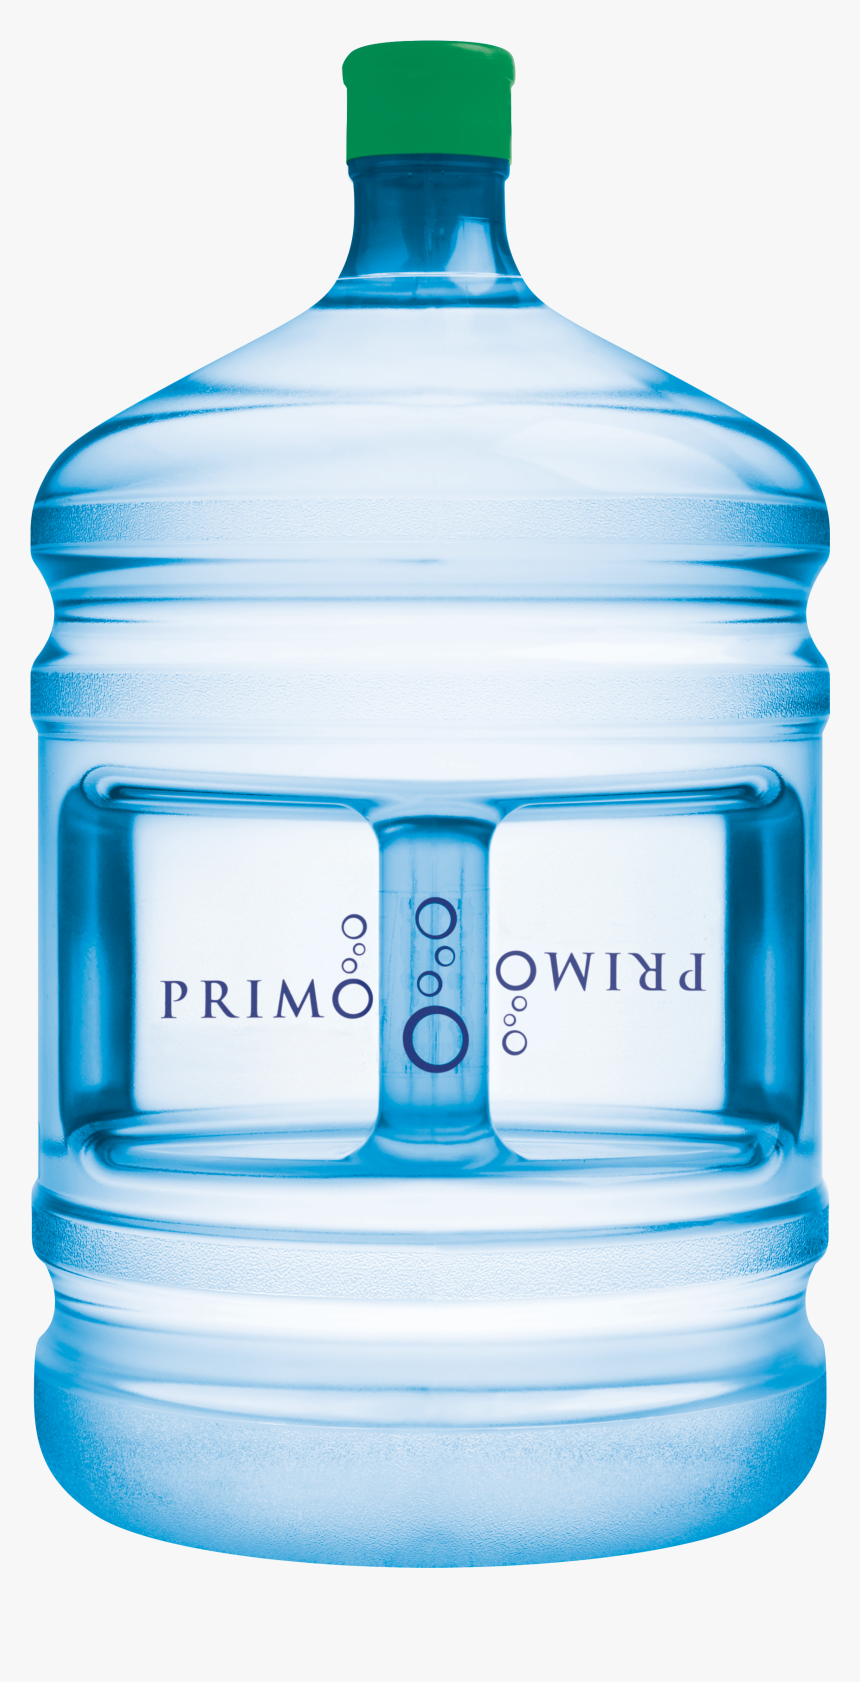 Water Jar Png, Transparent Png, Free Download